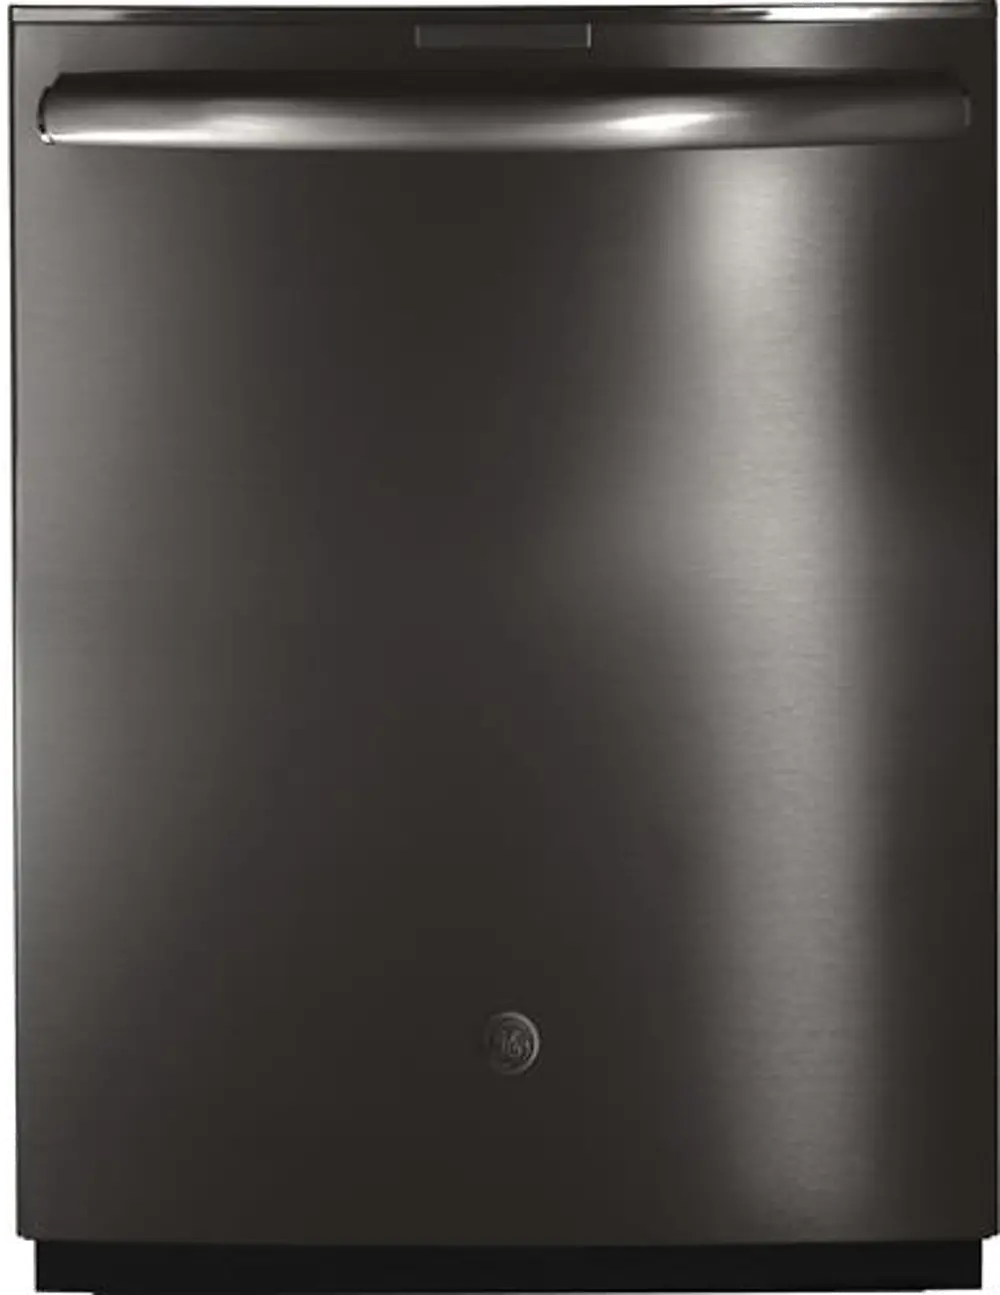 PDT845SBLTS GE Profile Dishwasher - Black Stainless Steel-1